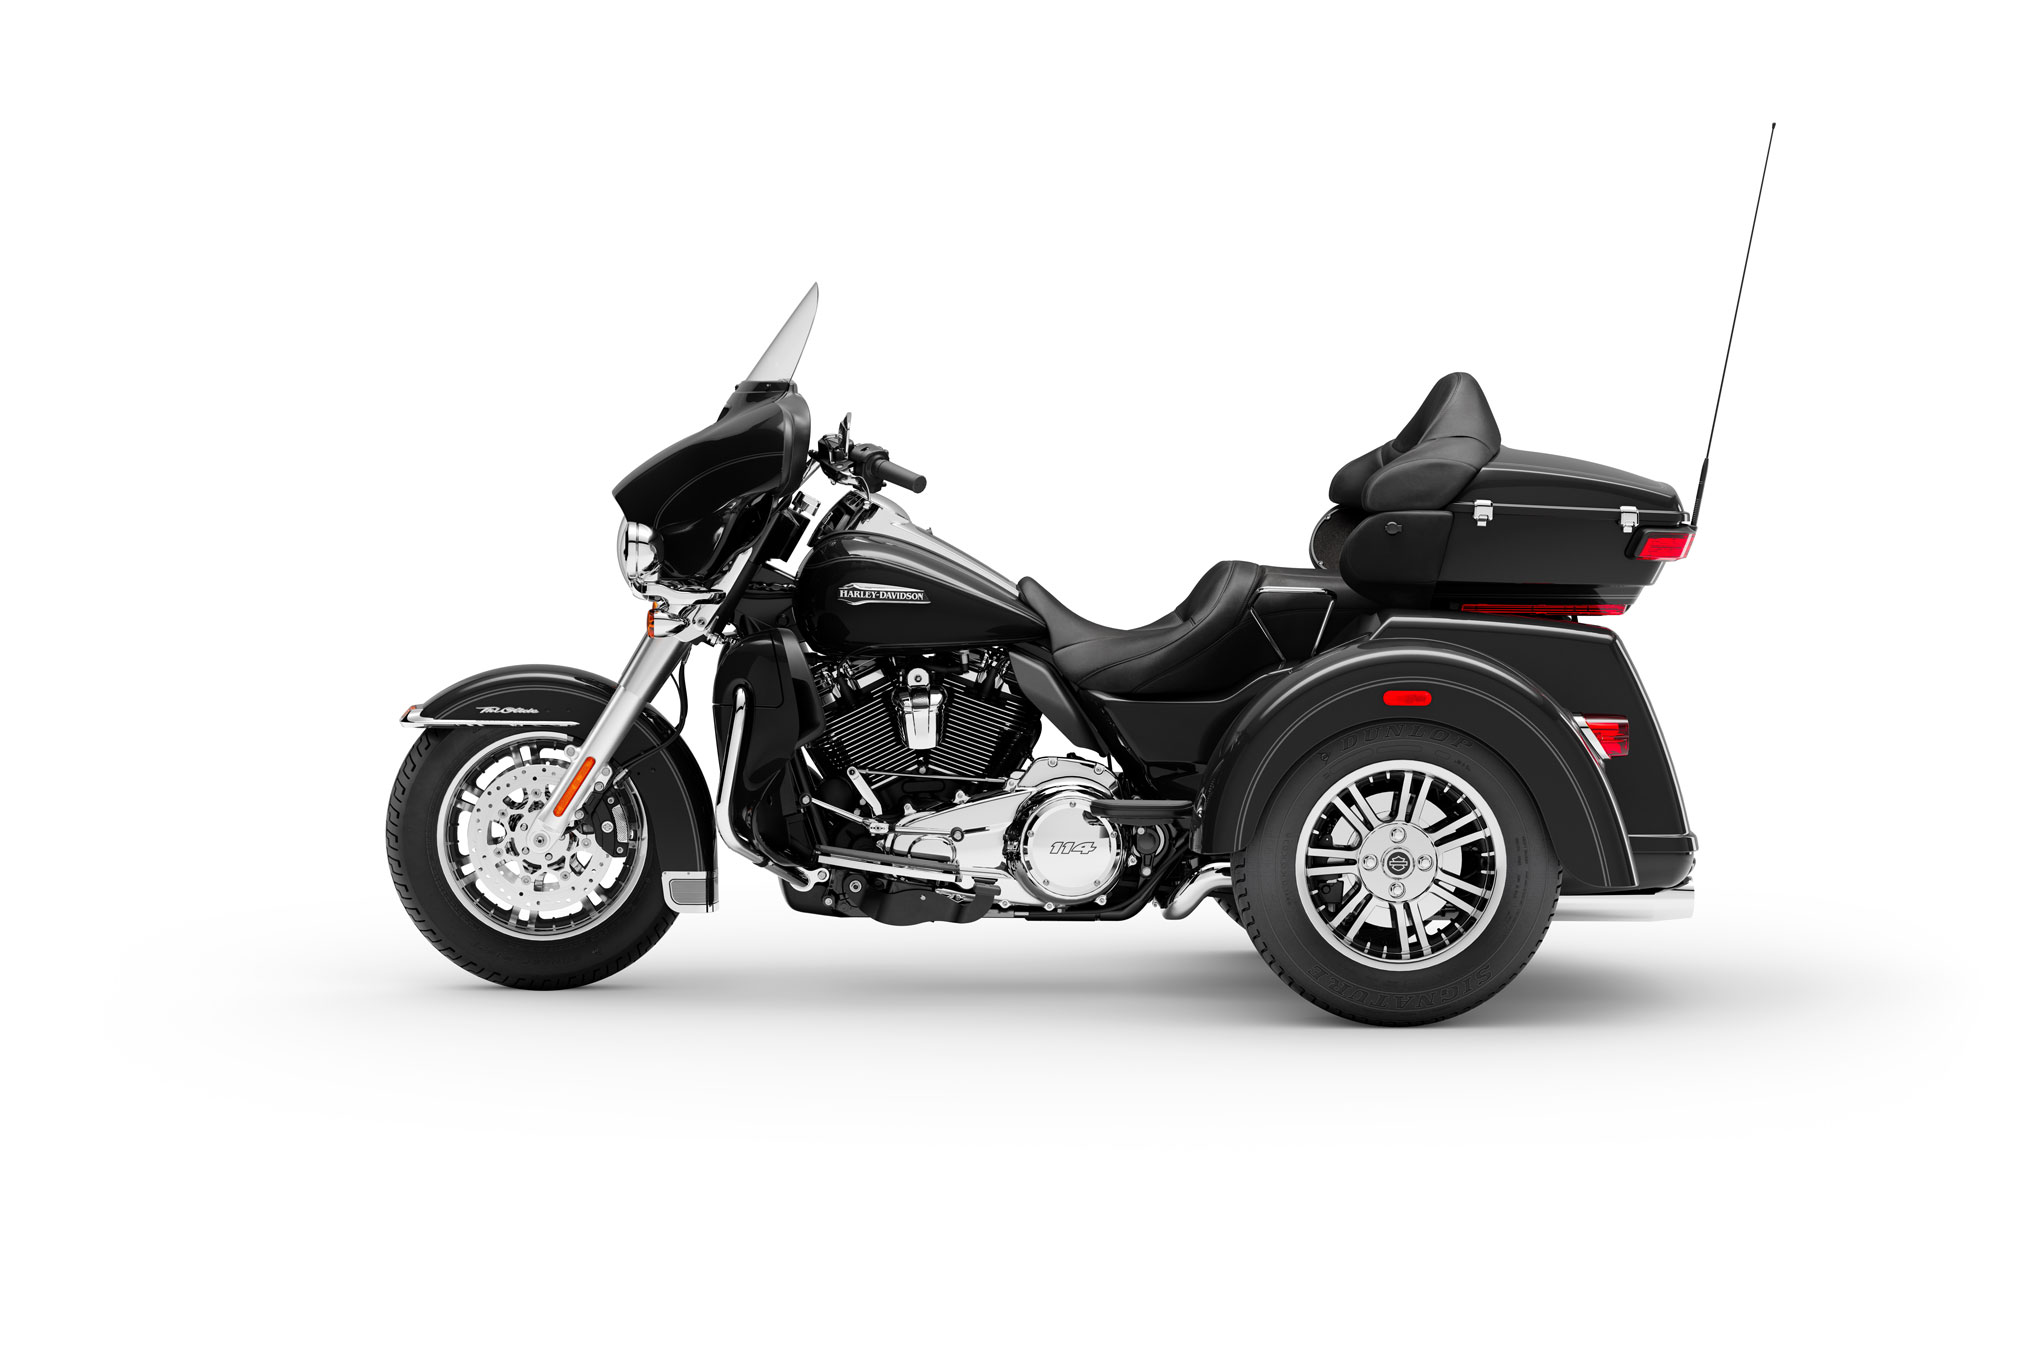  2019  Harley  Davidson  Tri  Glide  Ultra Guide  Total Motorcycle